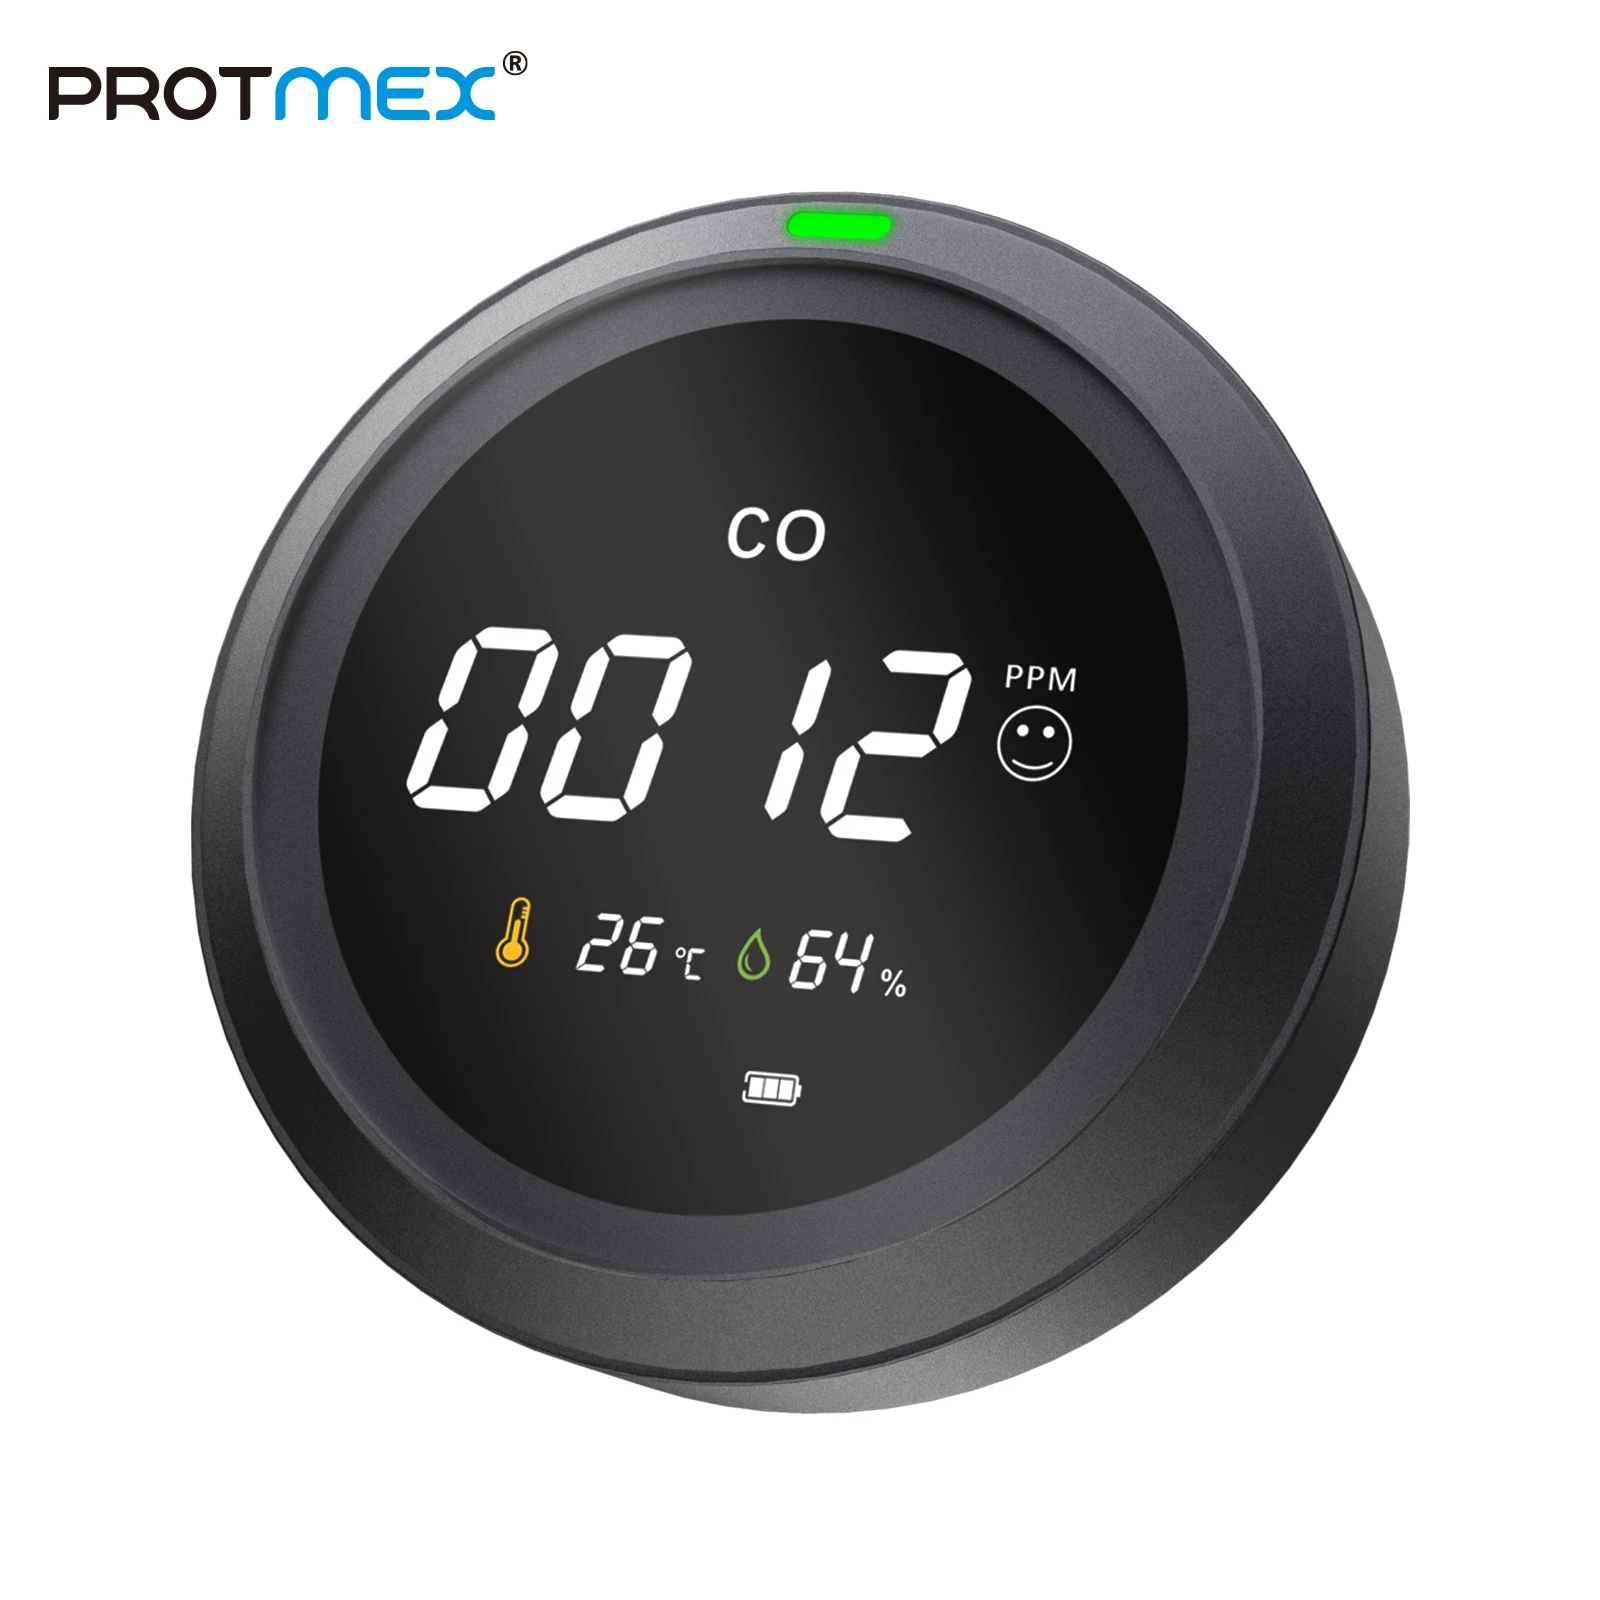 PROTMEX 2 in 1 CO Alarm Warning Detector pilot light Carbon Monoxide Coal Wood Smock Sensor for Home Industry Security PTH-12